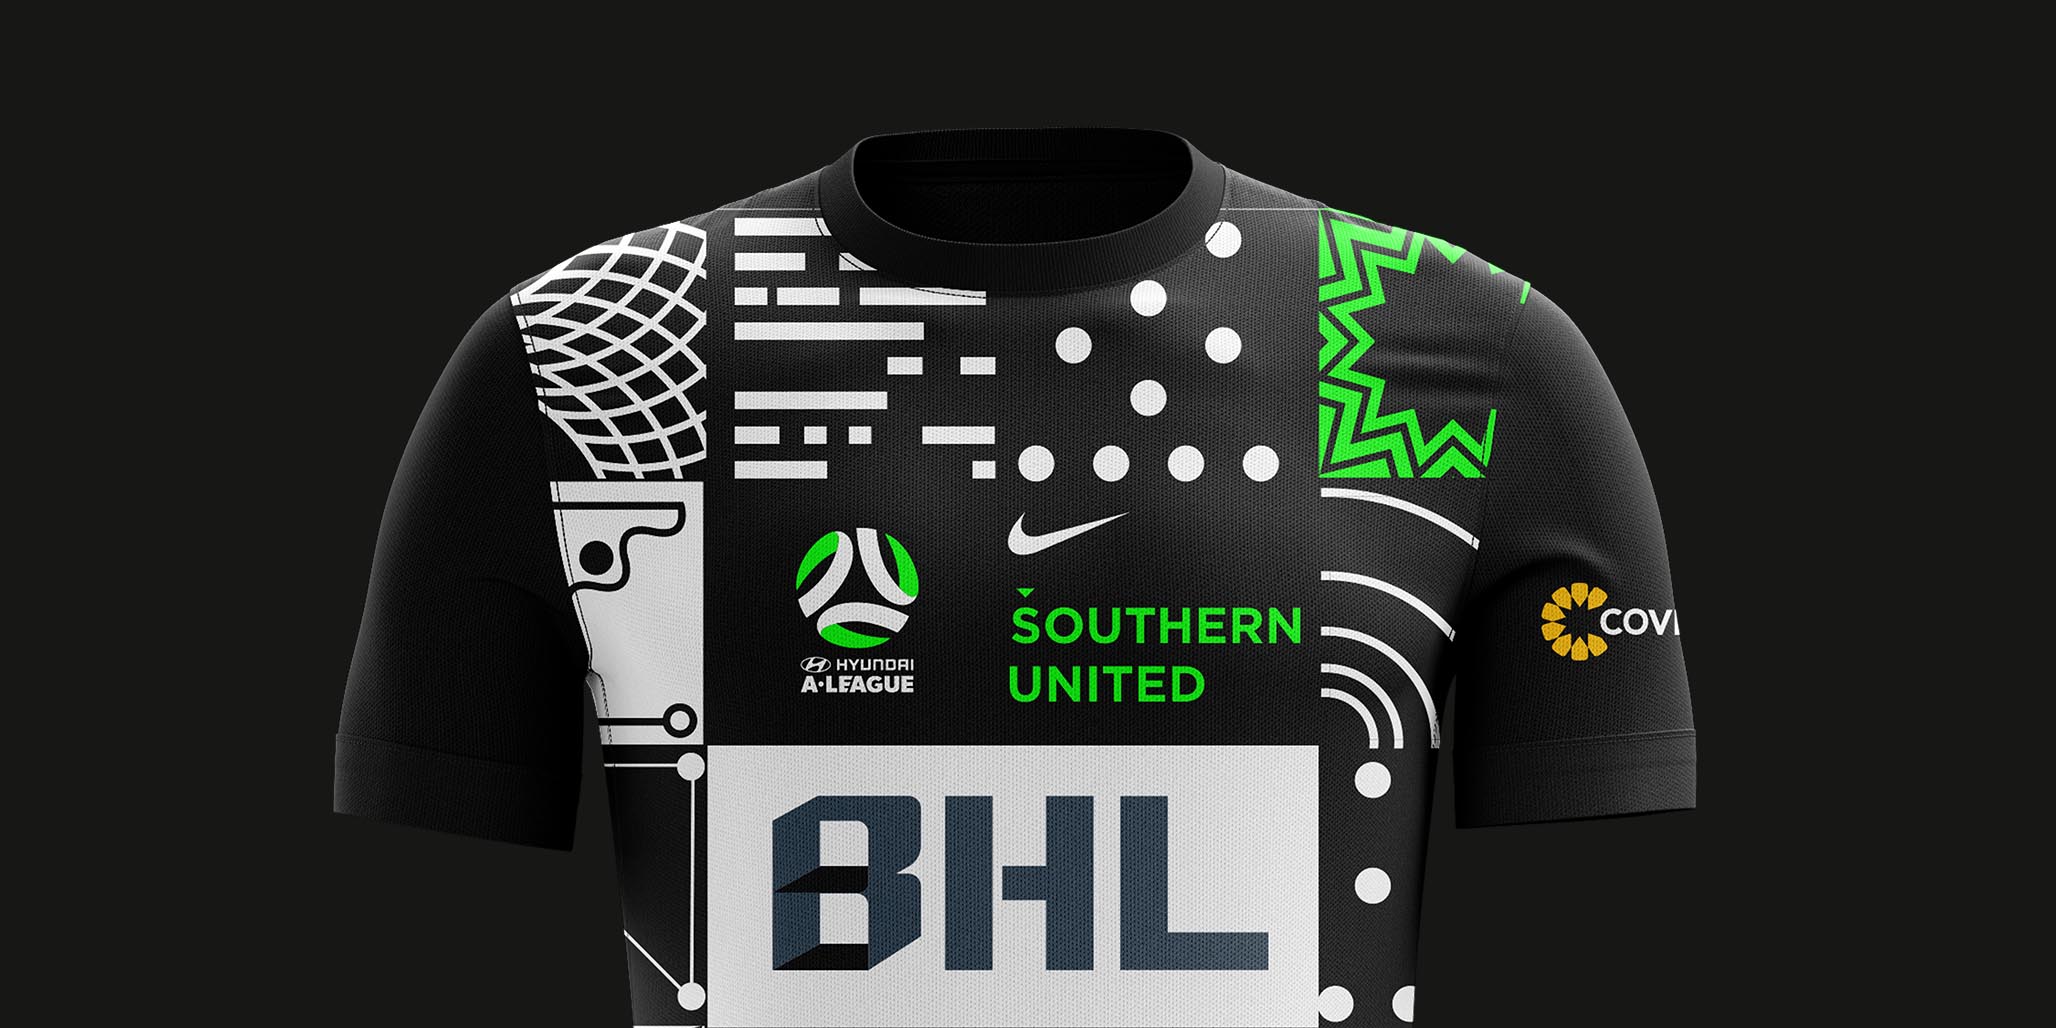 Sports Brand Identity Design by Branding Agency Percept in Sydney for a professional football club in Australia, image B